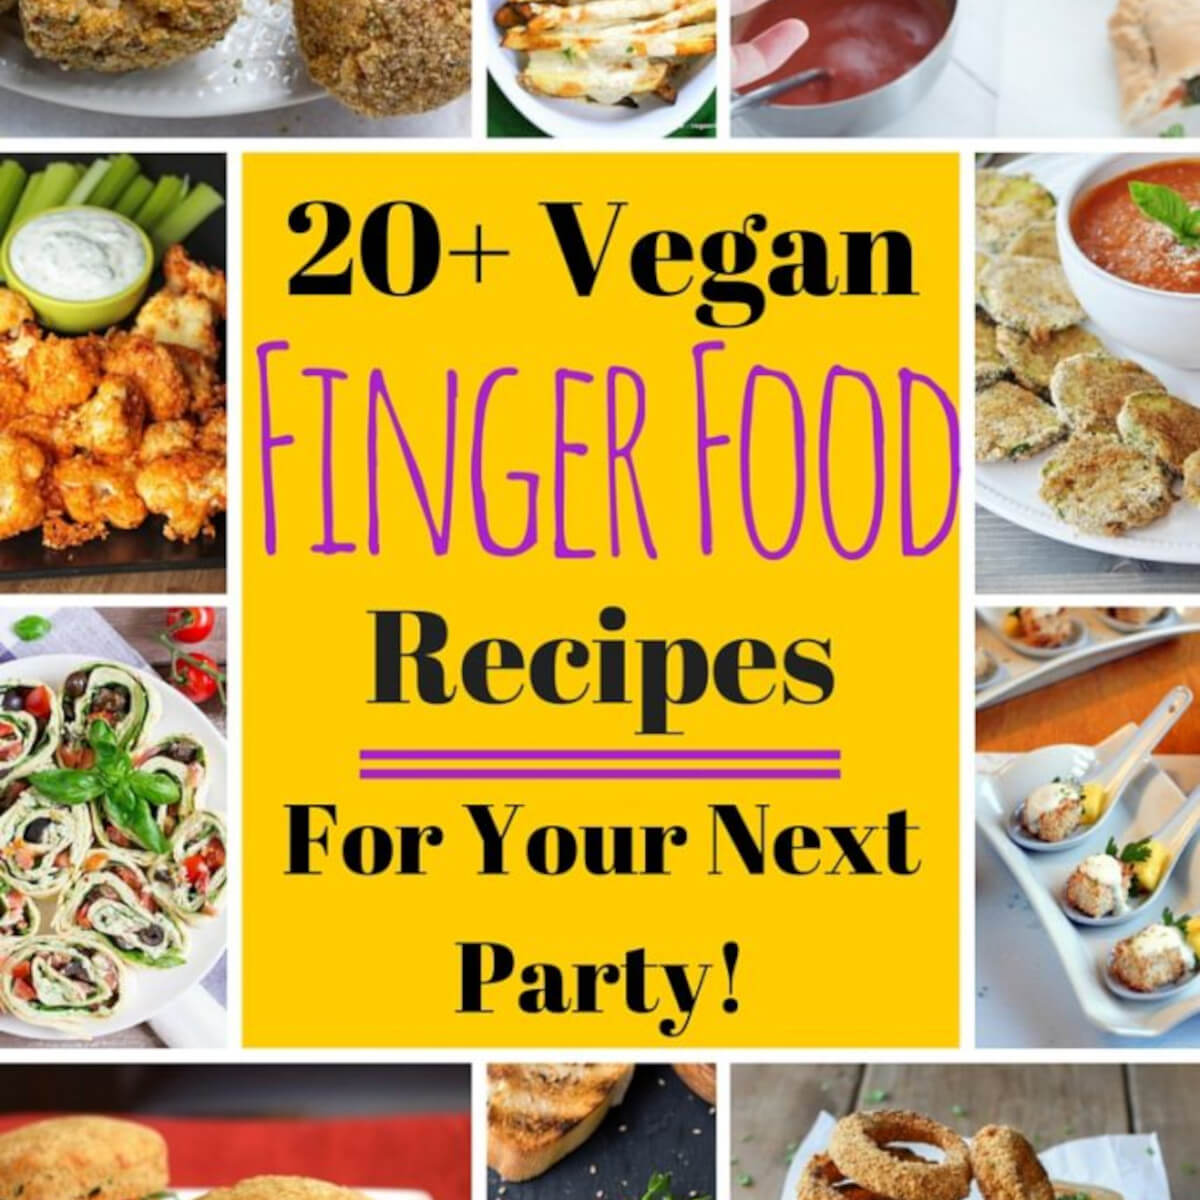 20+ Vegan Finger Food Recipes for your next party! | VeganFamilyRecipes.com | #appetizer #healthy #snacks